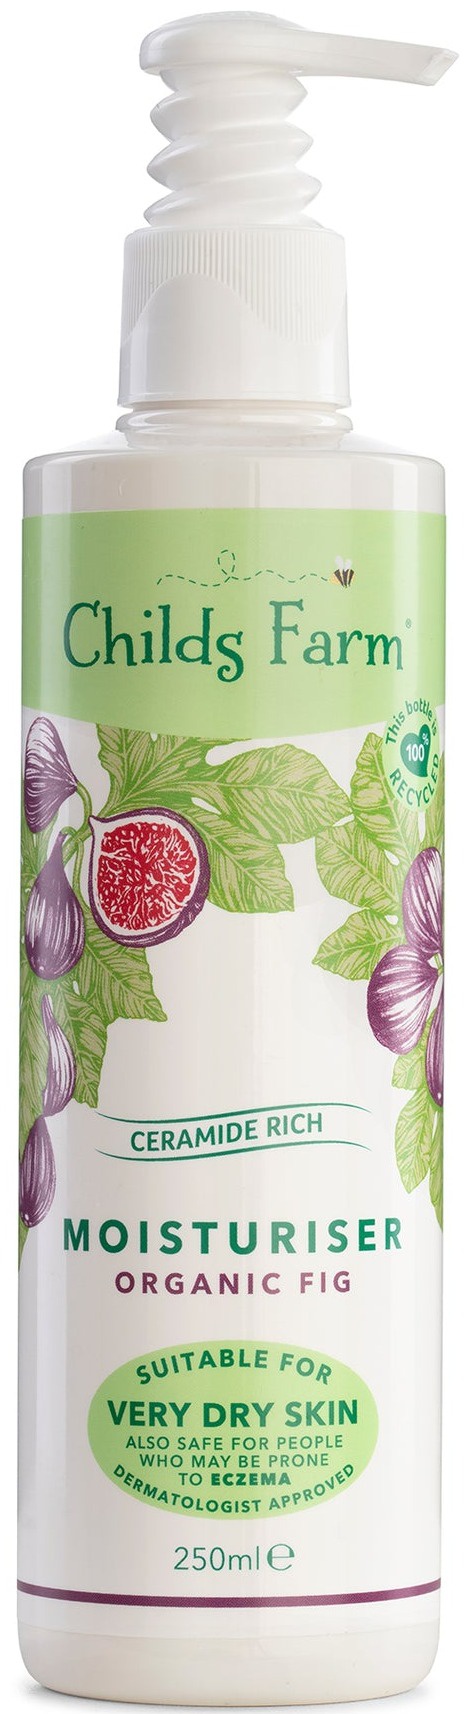 Childs Farm Ceramide Rich Moisturiser Organic Fig